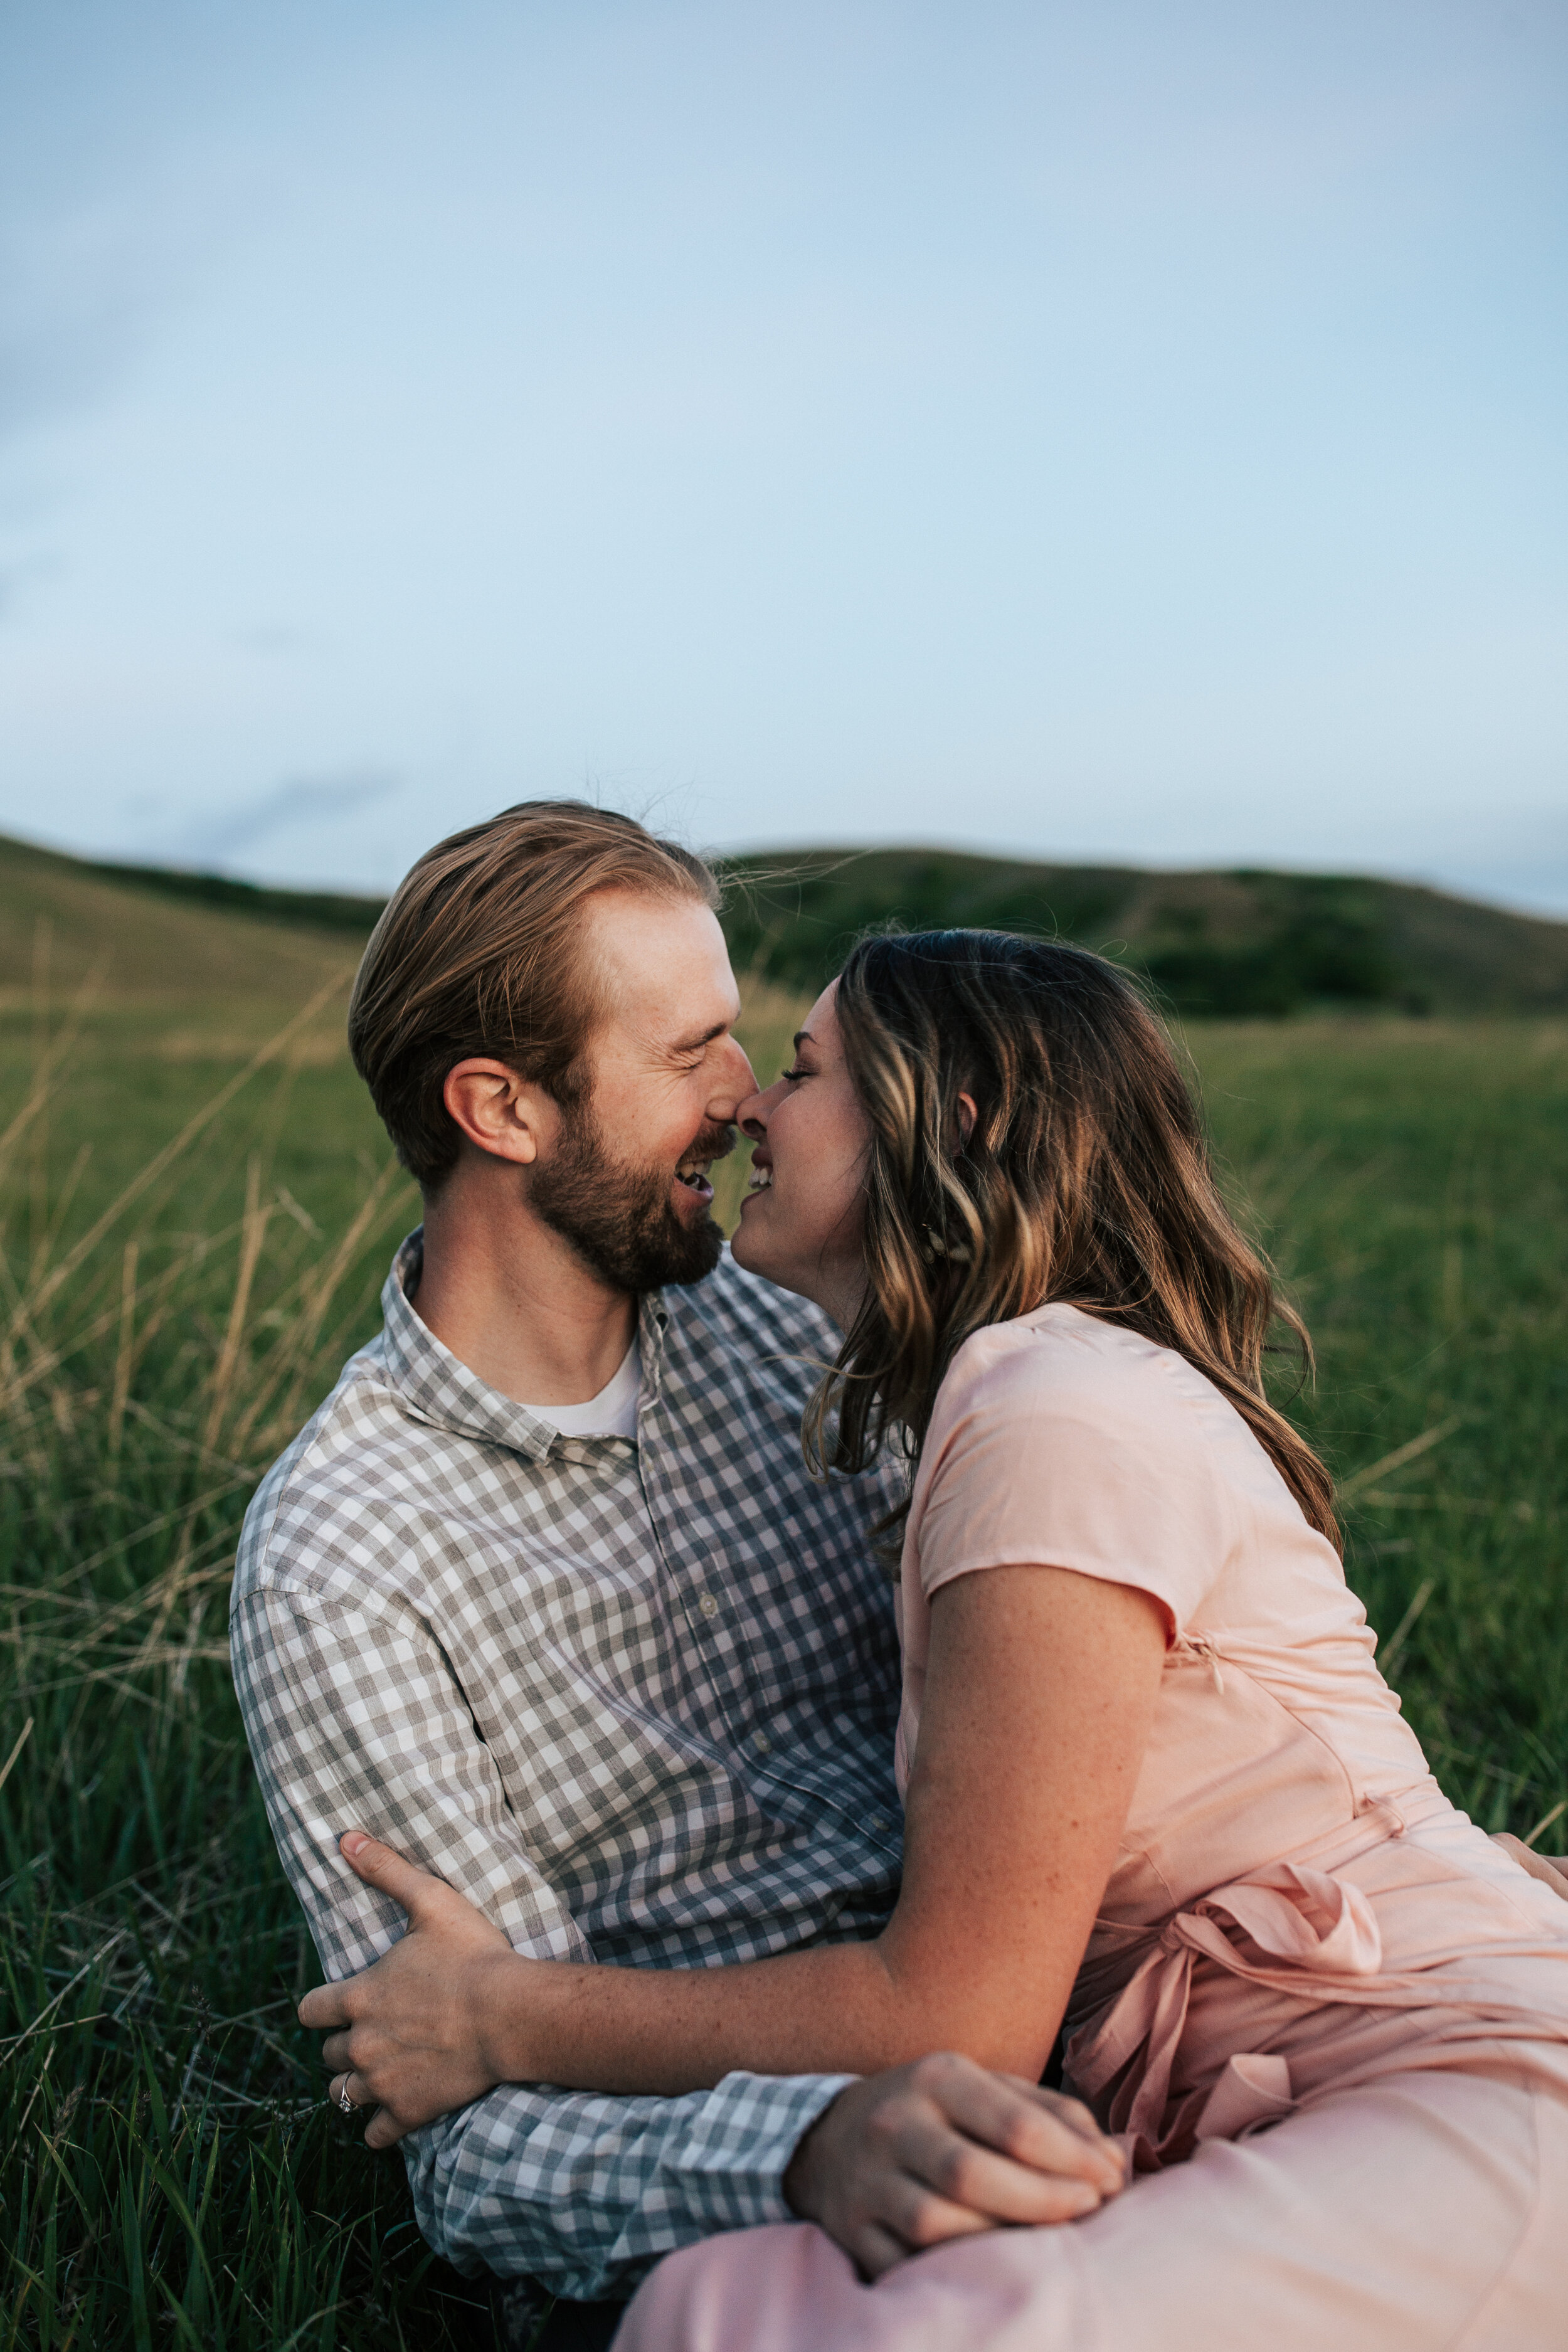 Utah summer engagements rolling hills mountains romantic couple shoot #utahphotographer #weddingphotographer #coupleshoot #engagements